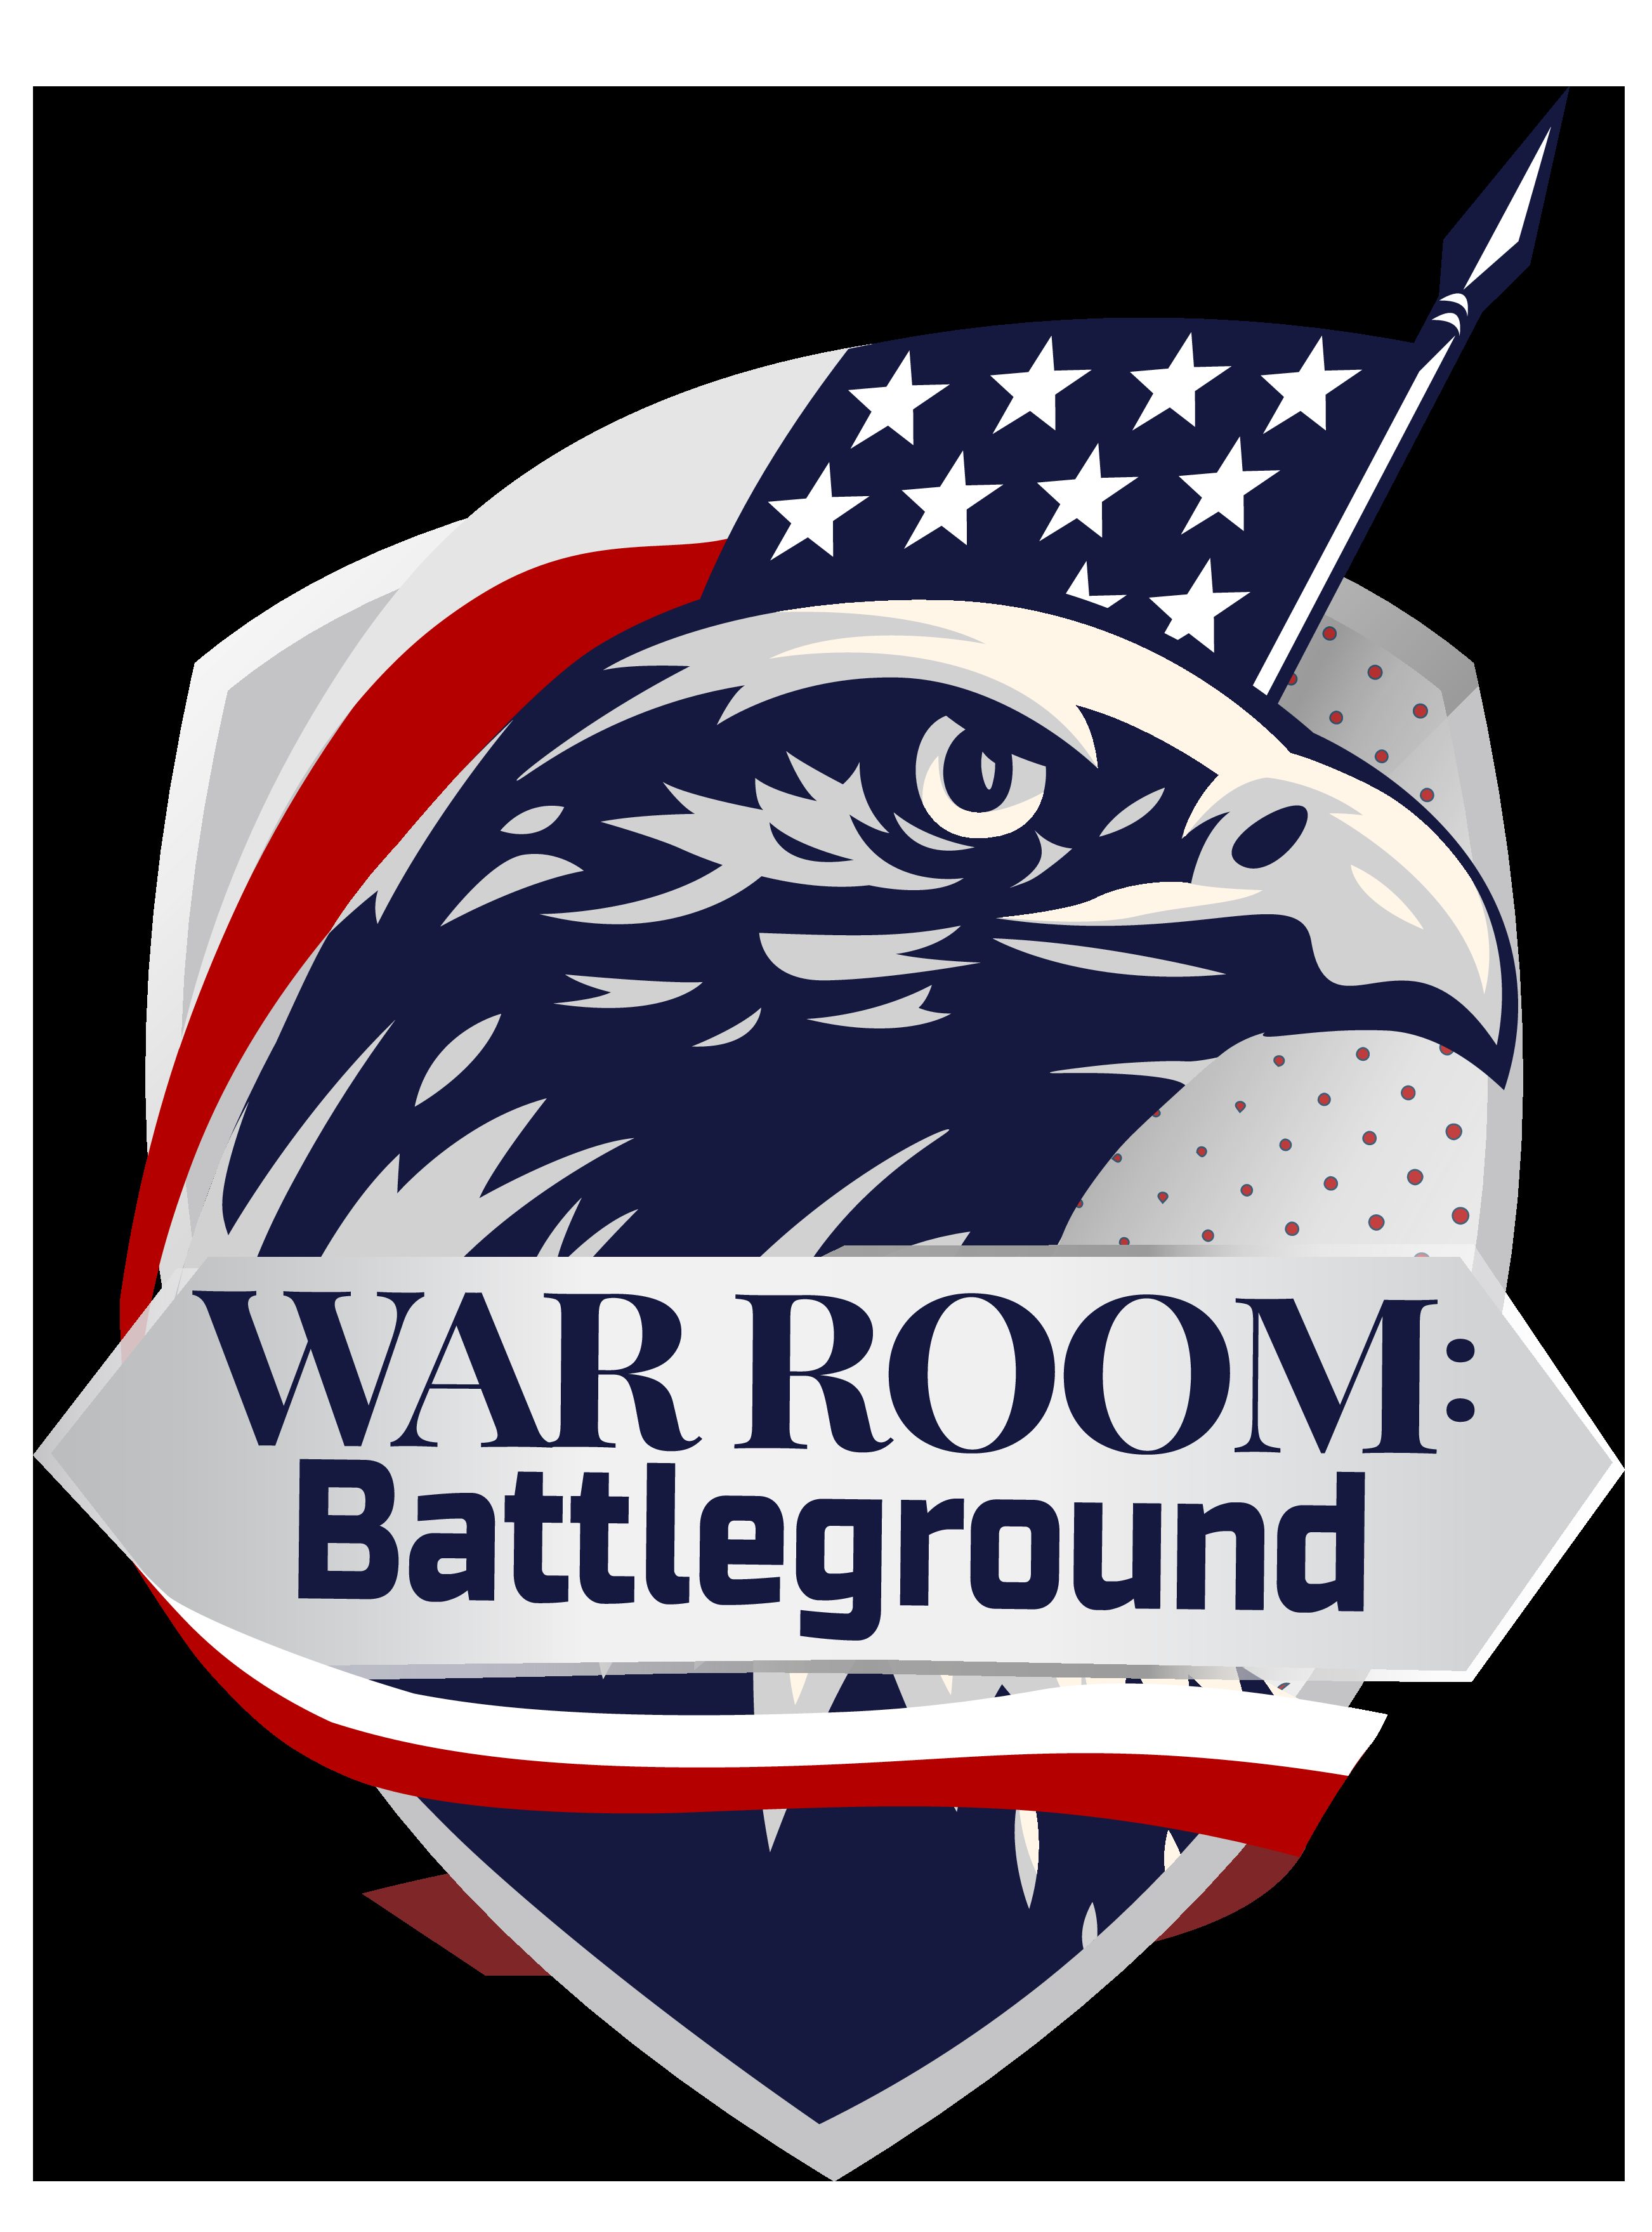 WarRoom Battleground EP 234: The New Trials Of Fauci